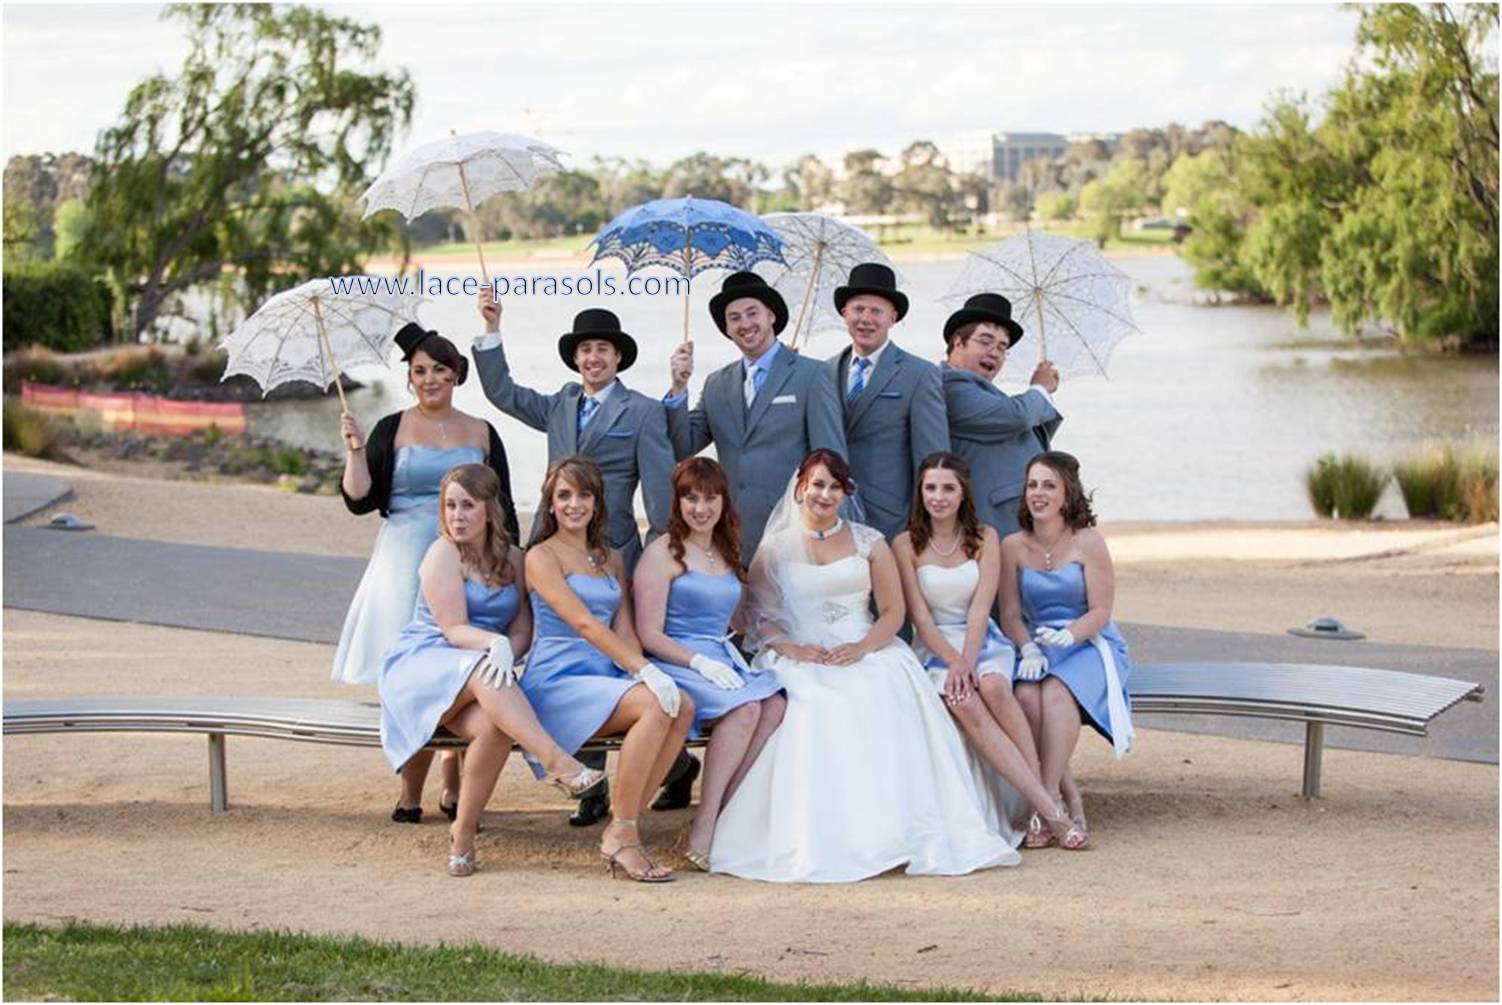 Bridesmaids with parasols